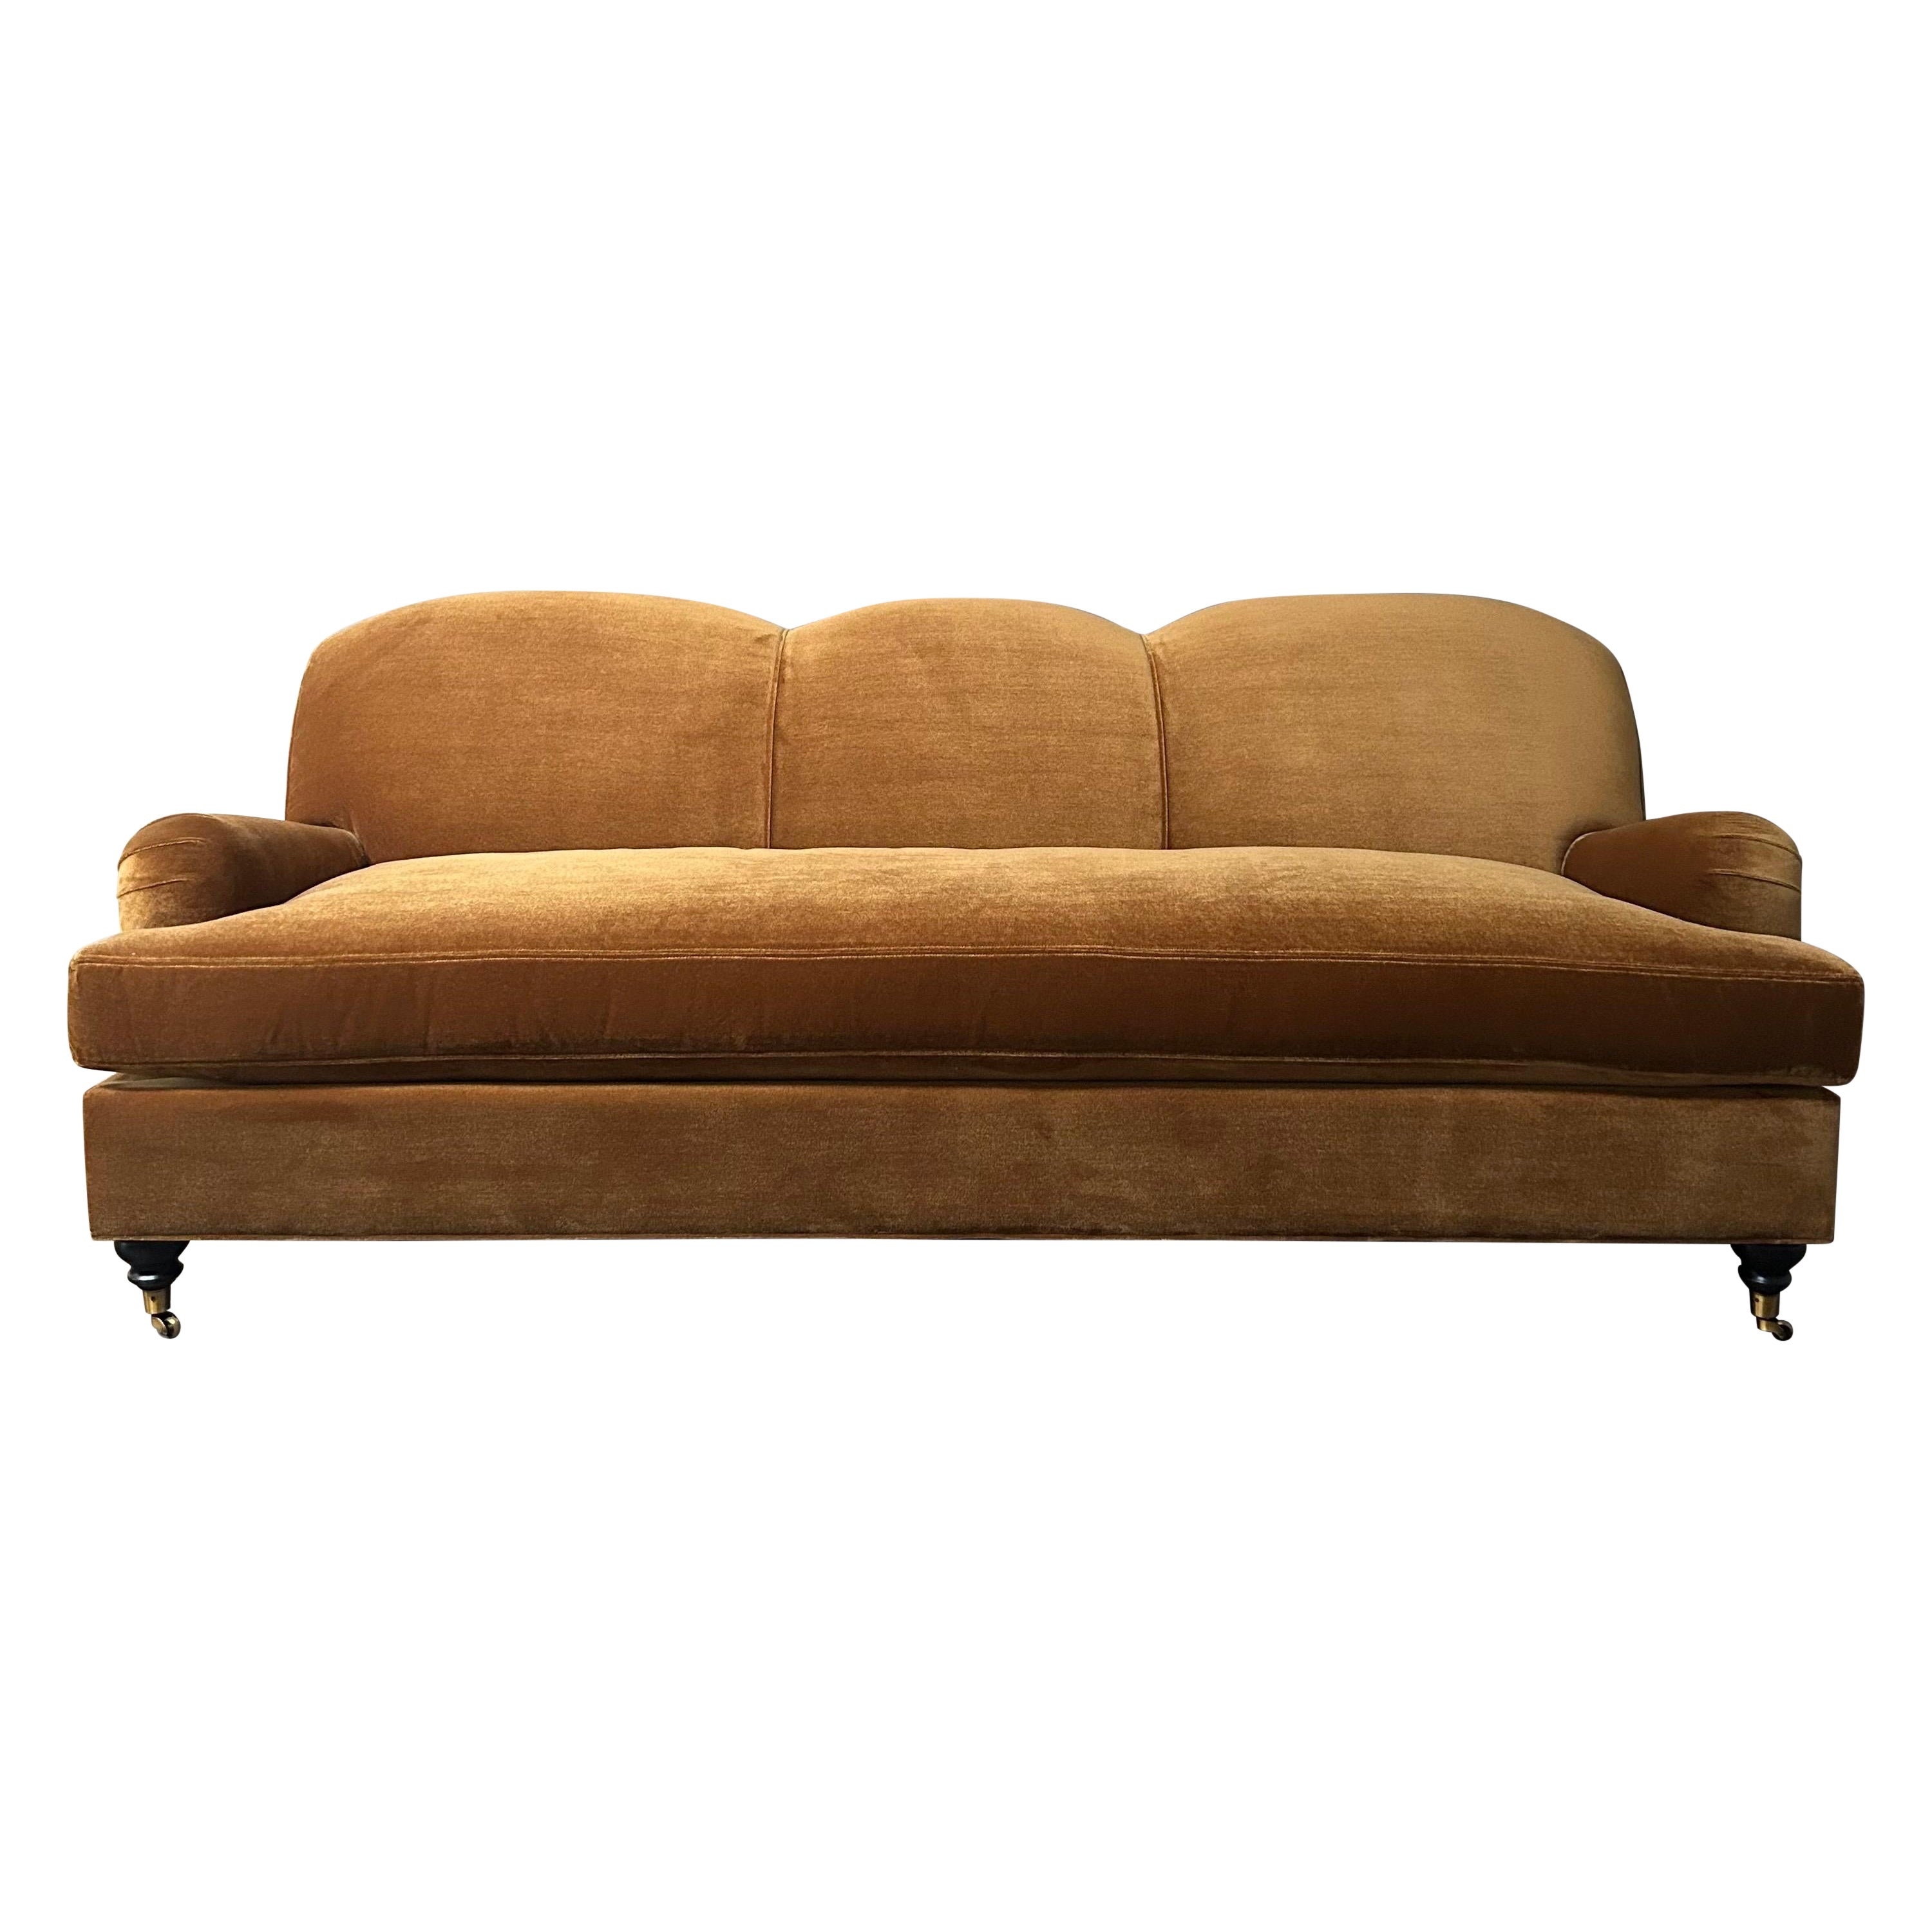 English roll arm sofa For Sale